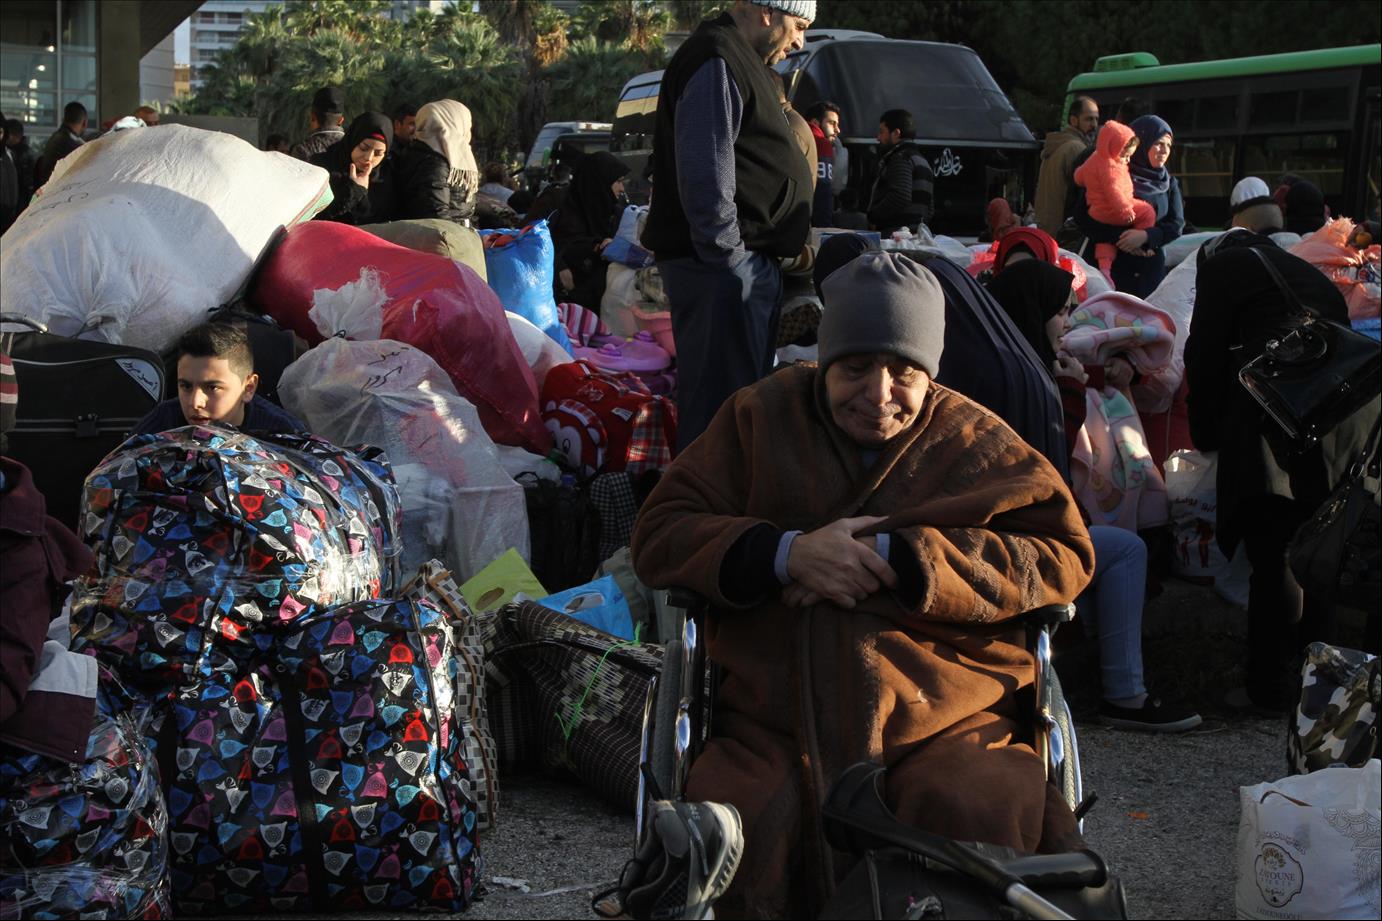  Lebanon Asks UN Refugee Agency For Syrian Refugee Data To Tighten Control 